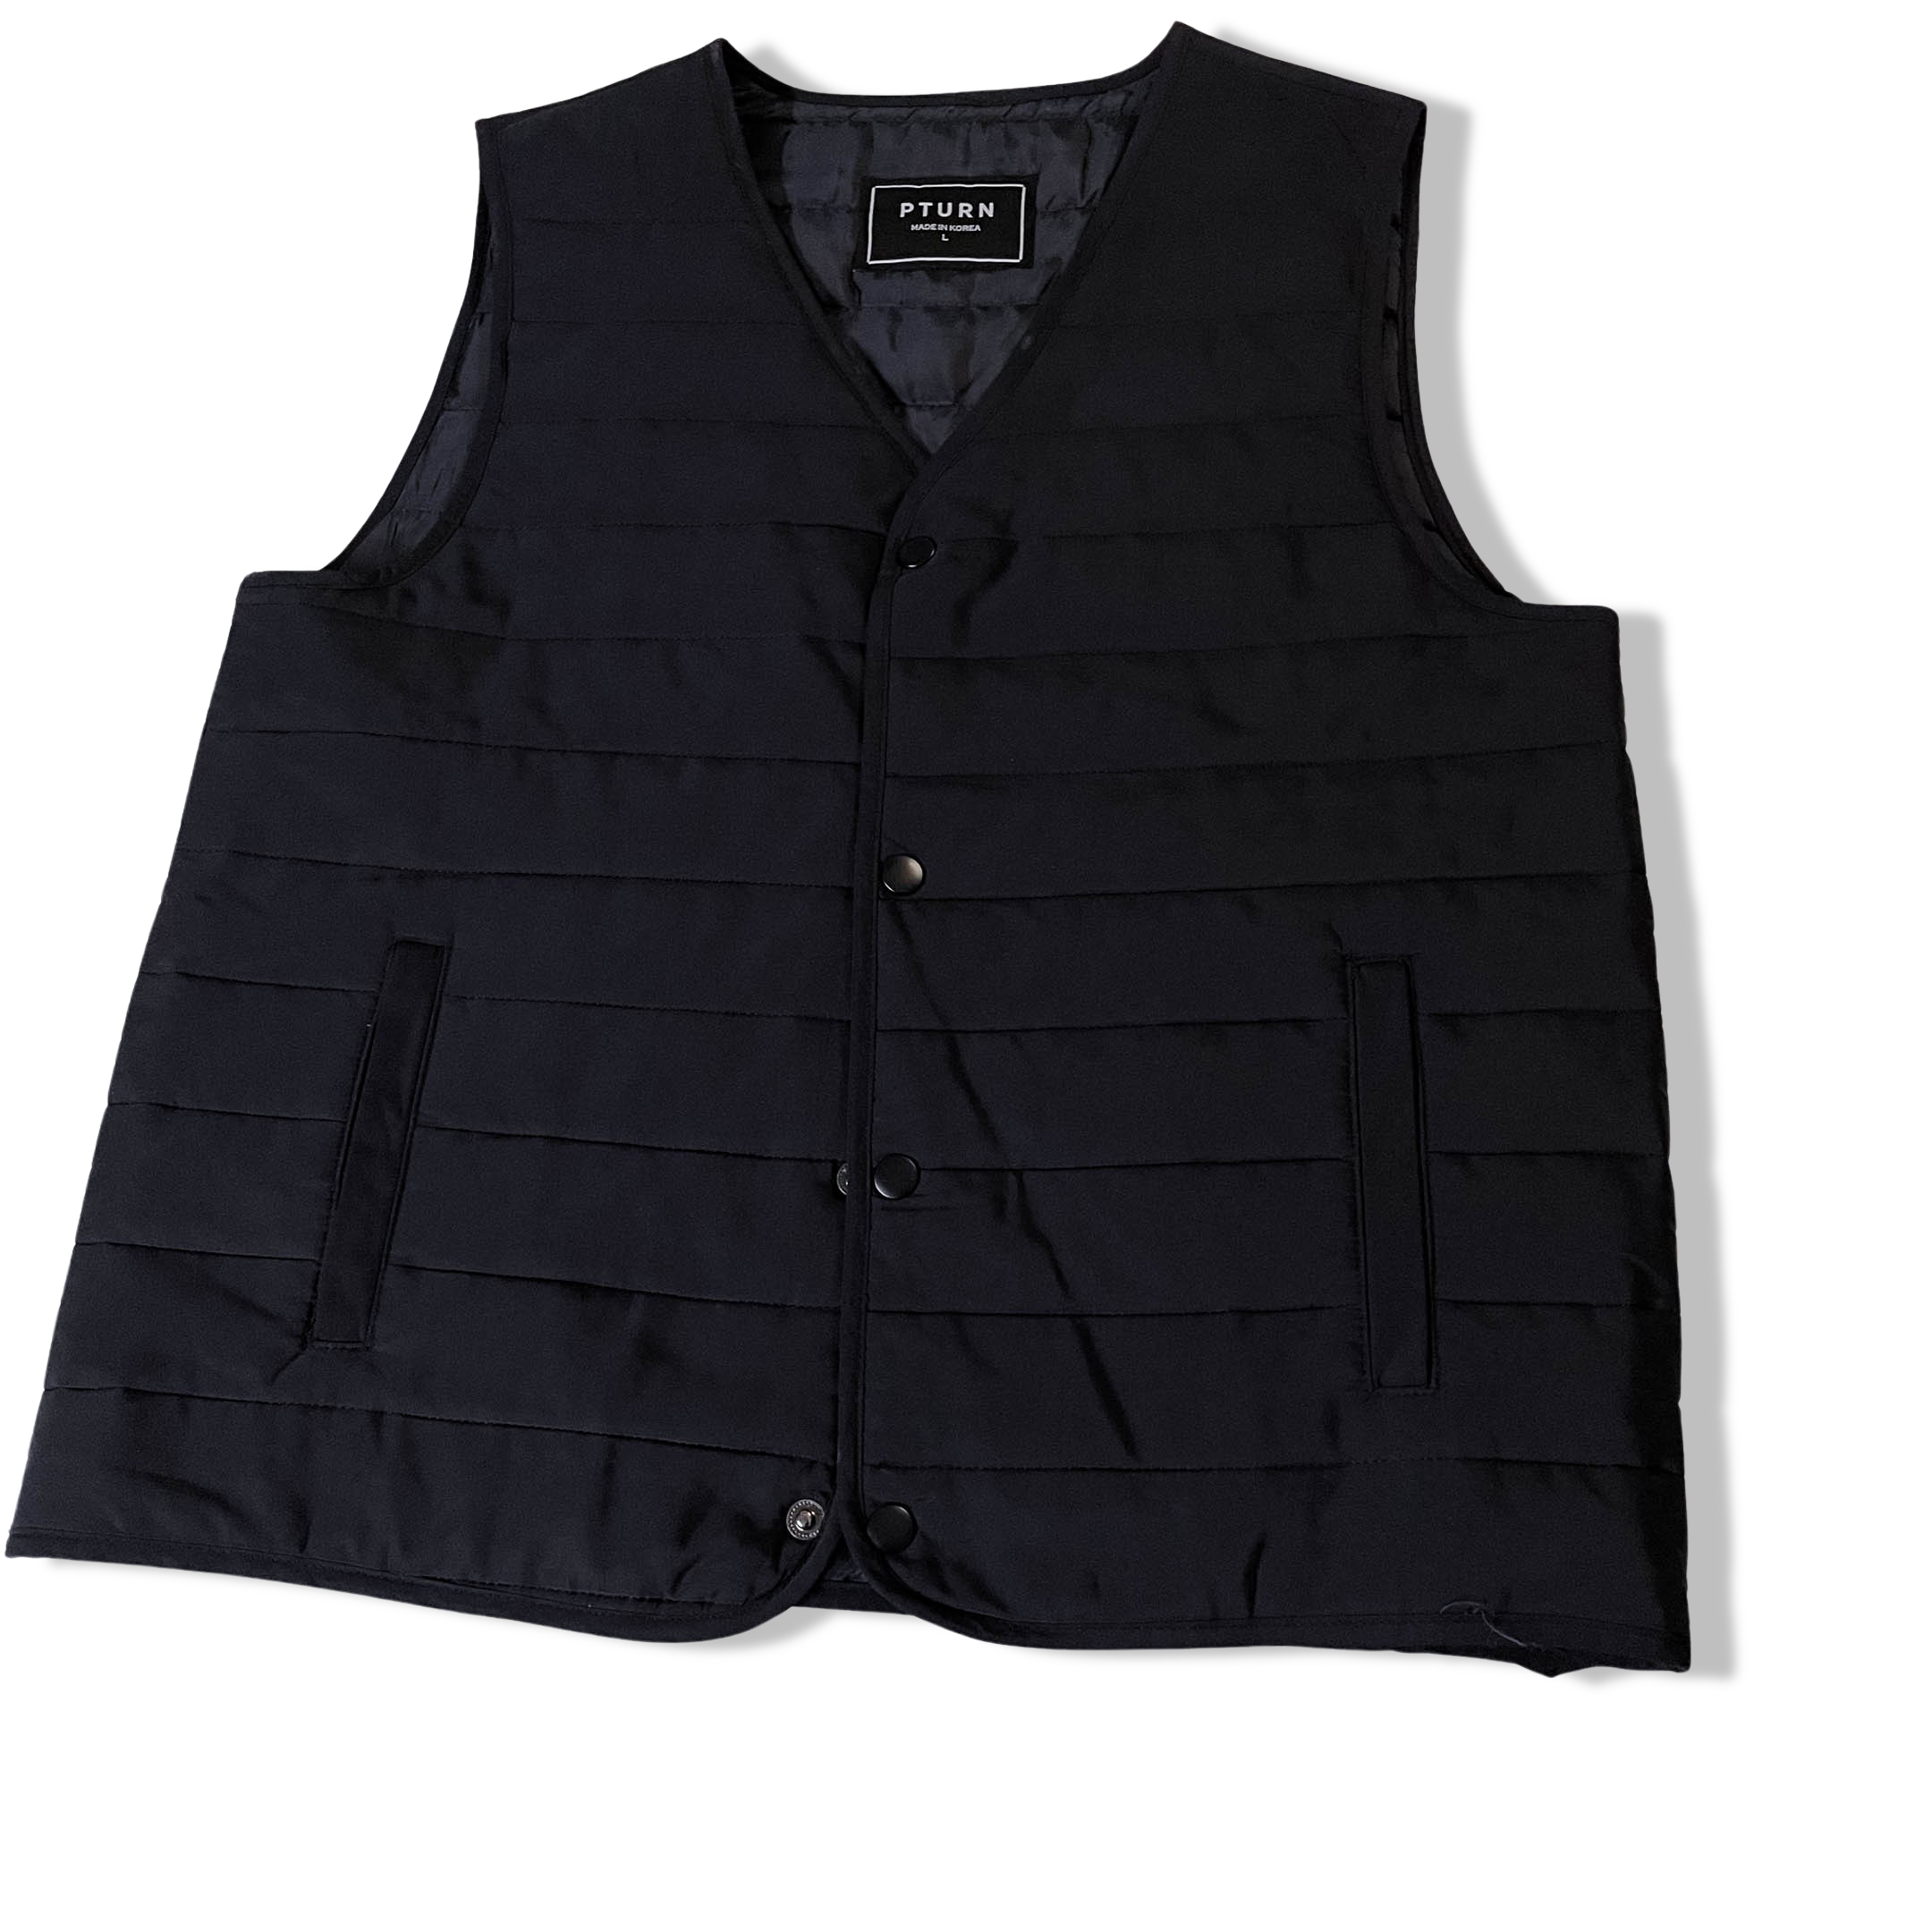 Vintage Pturn mens padded quilted black sleeveless jacket size L